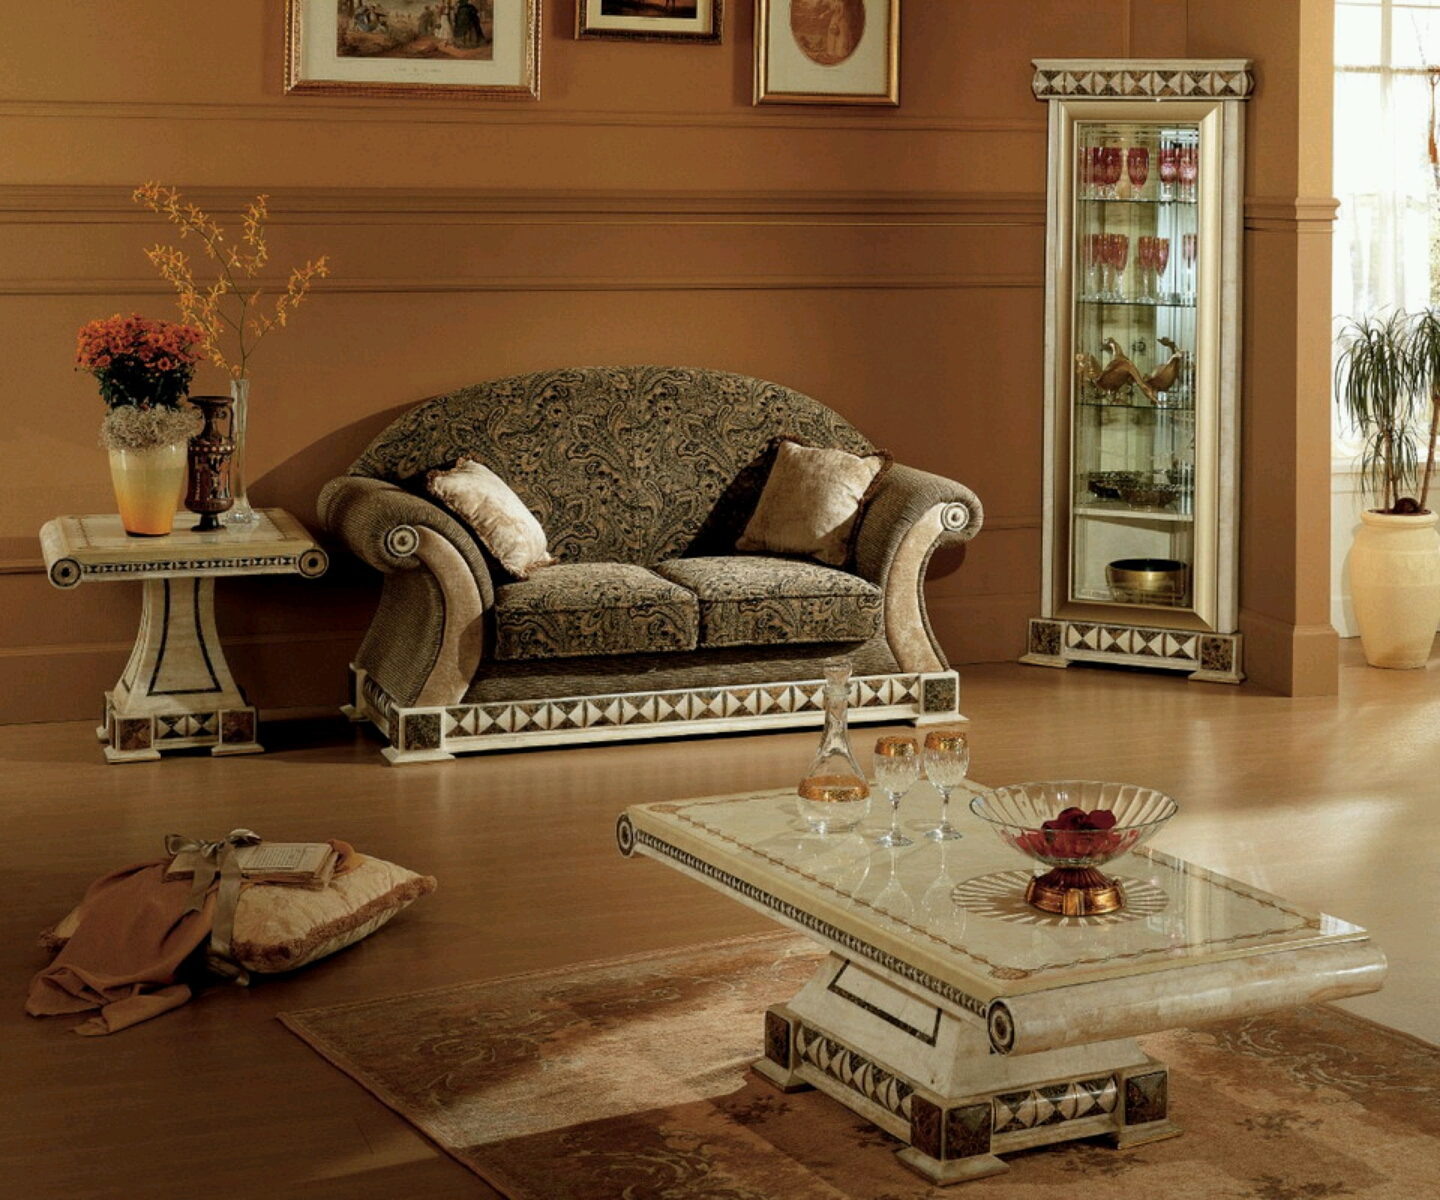 Luxury homes interior decoration living room designs ideas. | New home designs